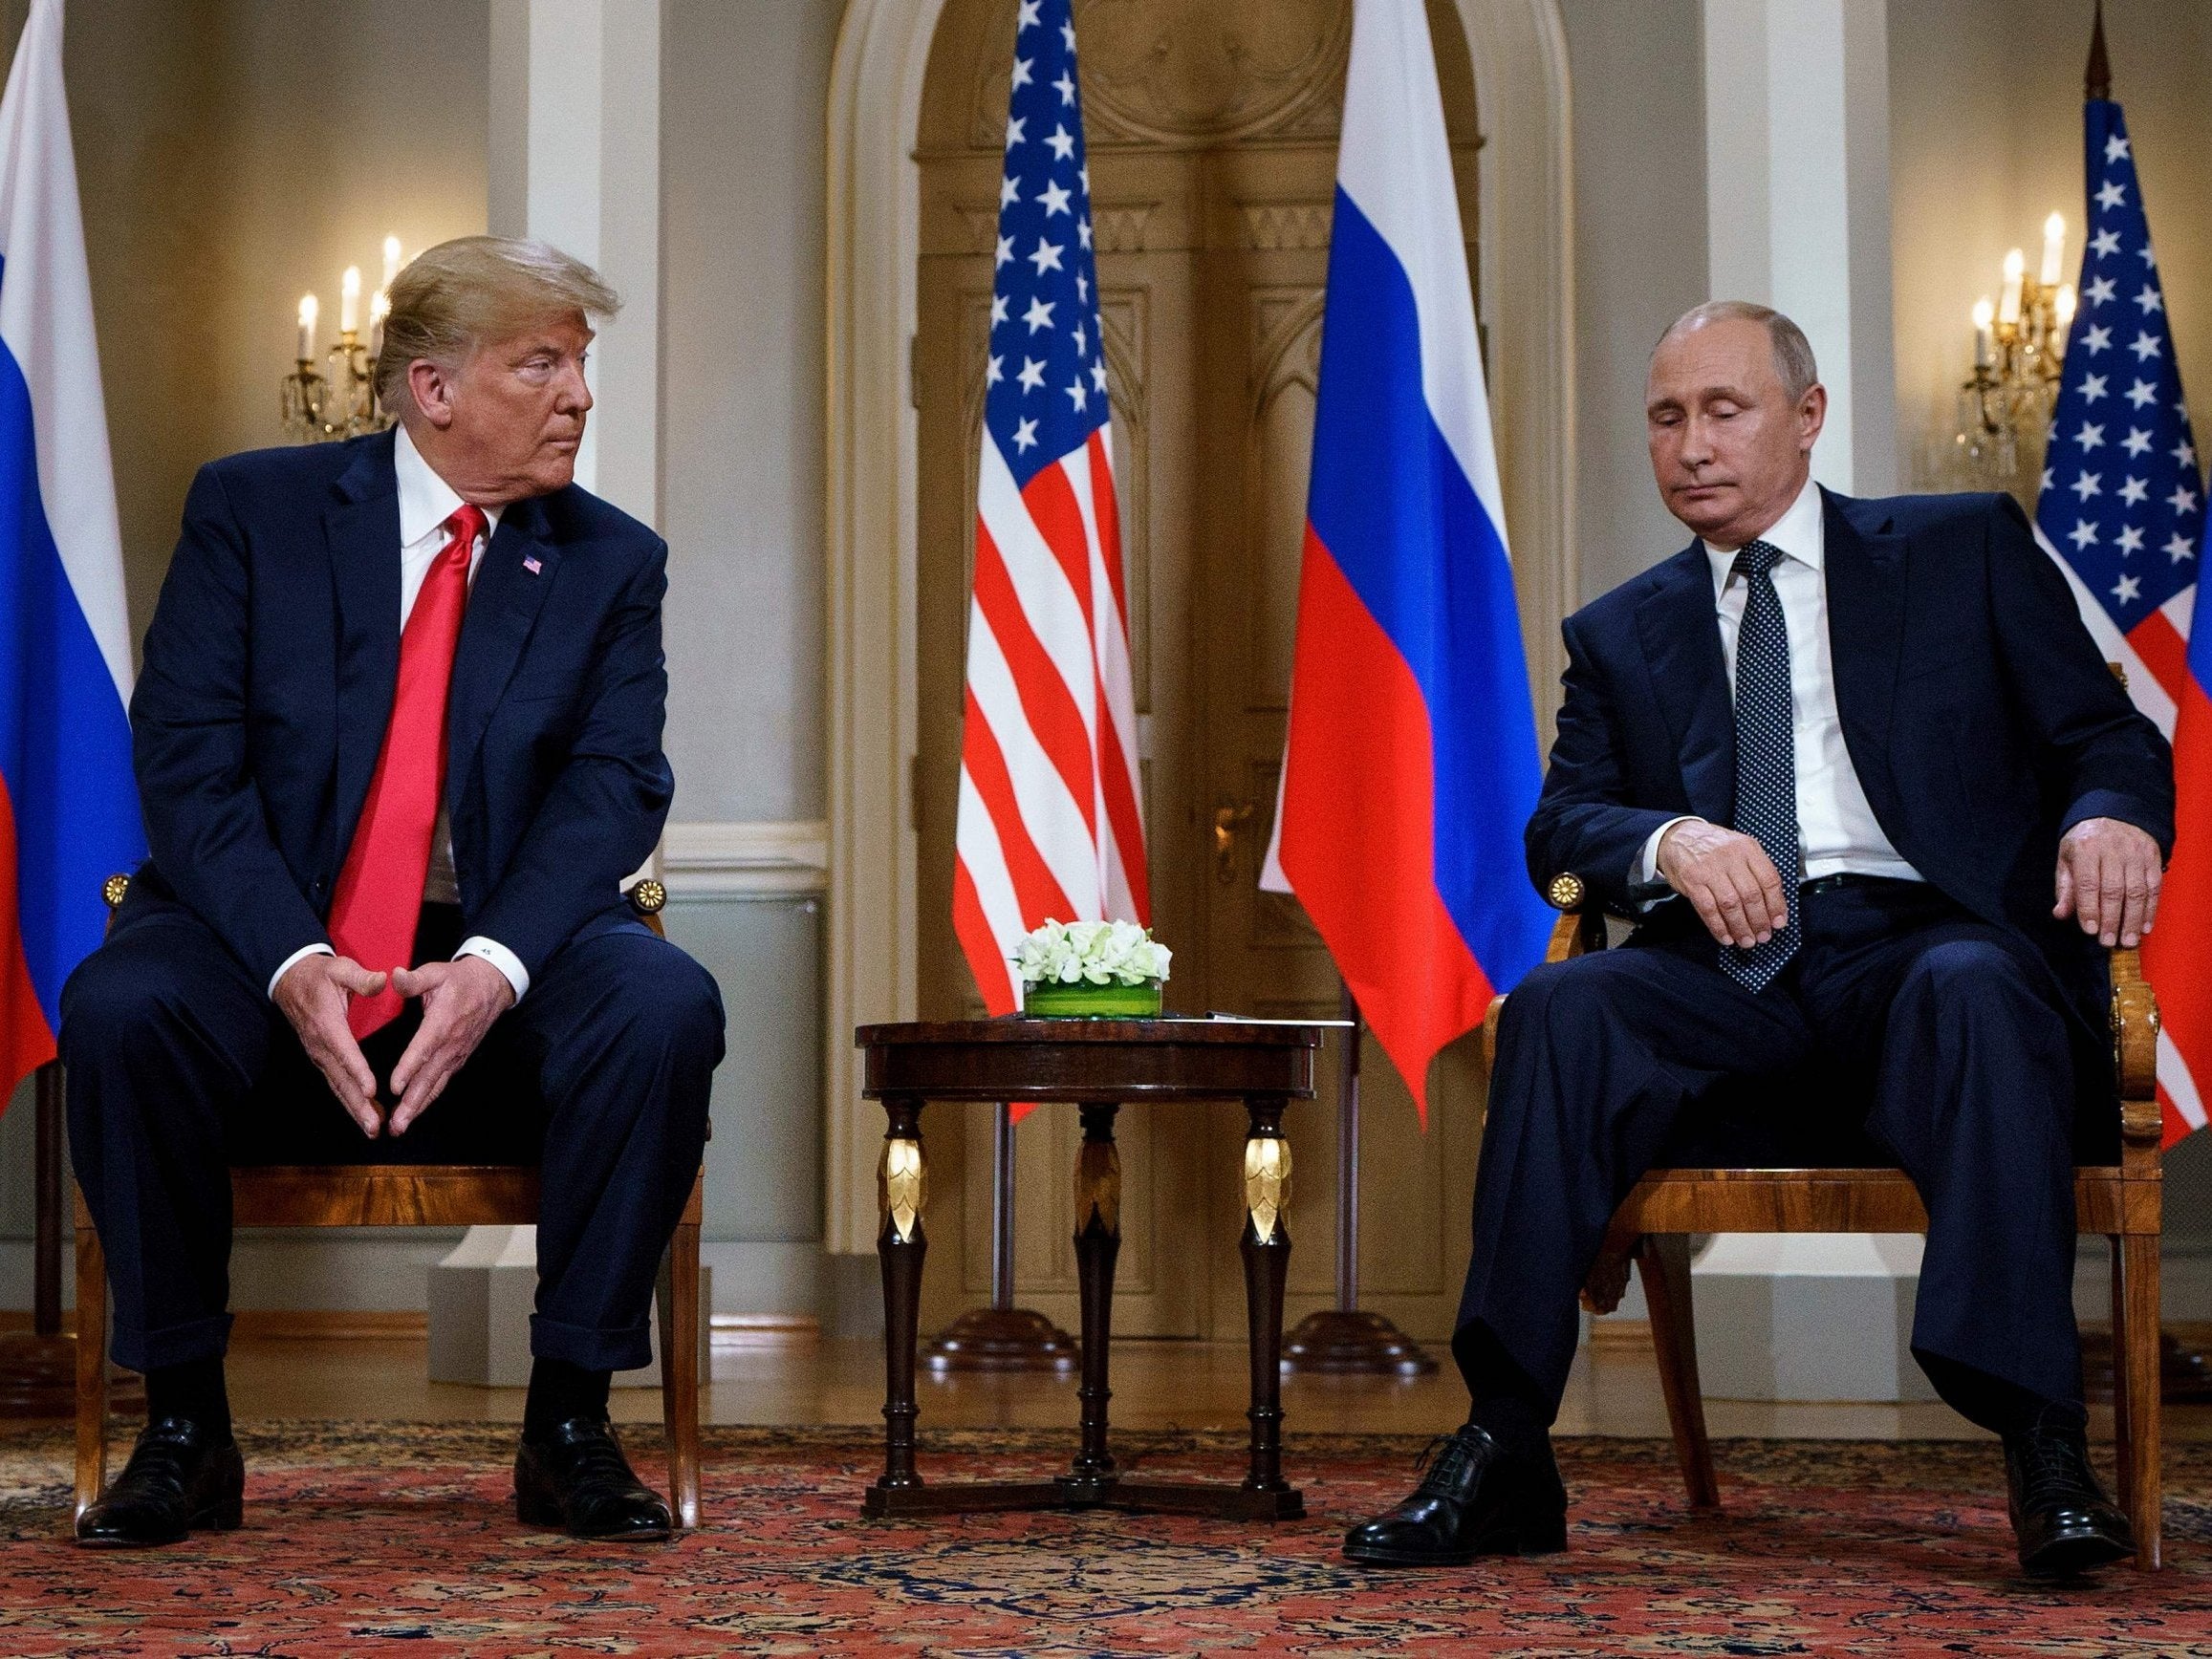 New sanctions seemed unlikely when presidents Trump and Putin met in Helsinki